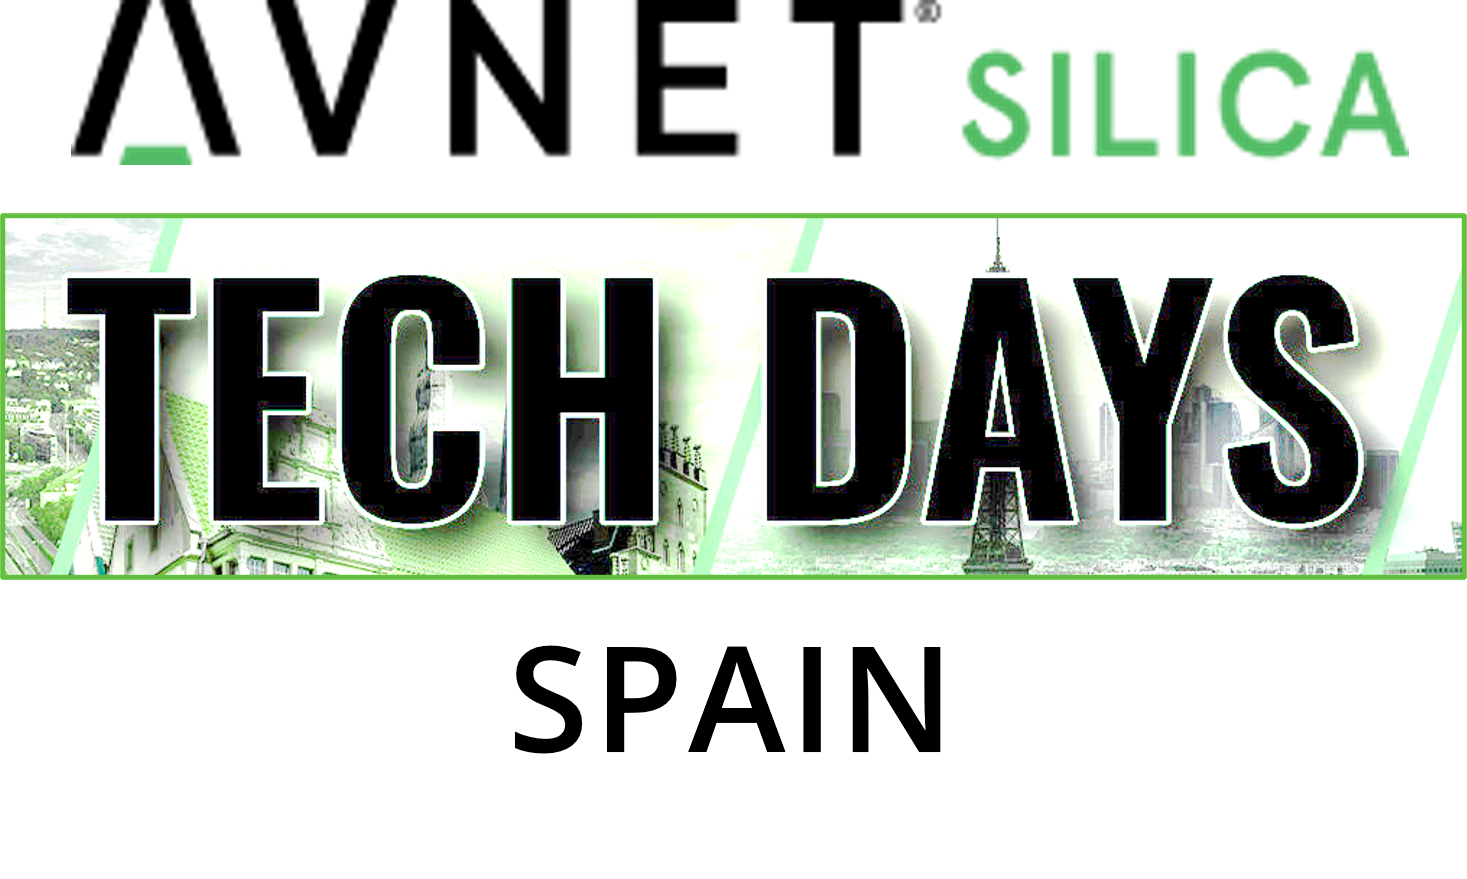 Avnet Silica Tech Day Spain